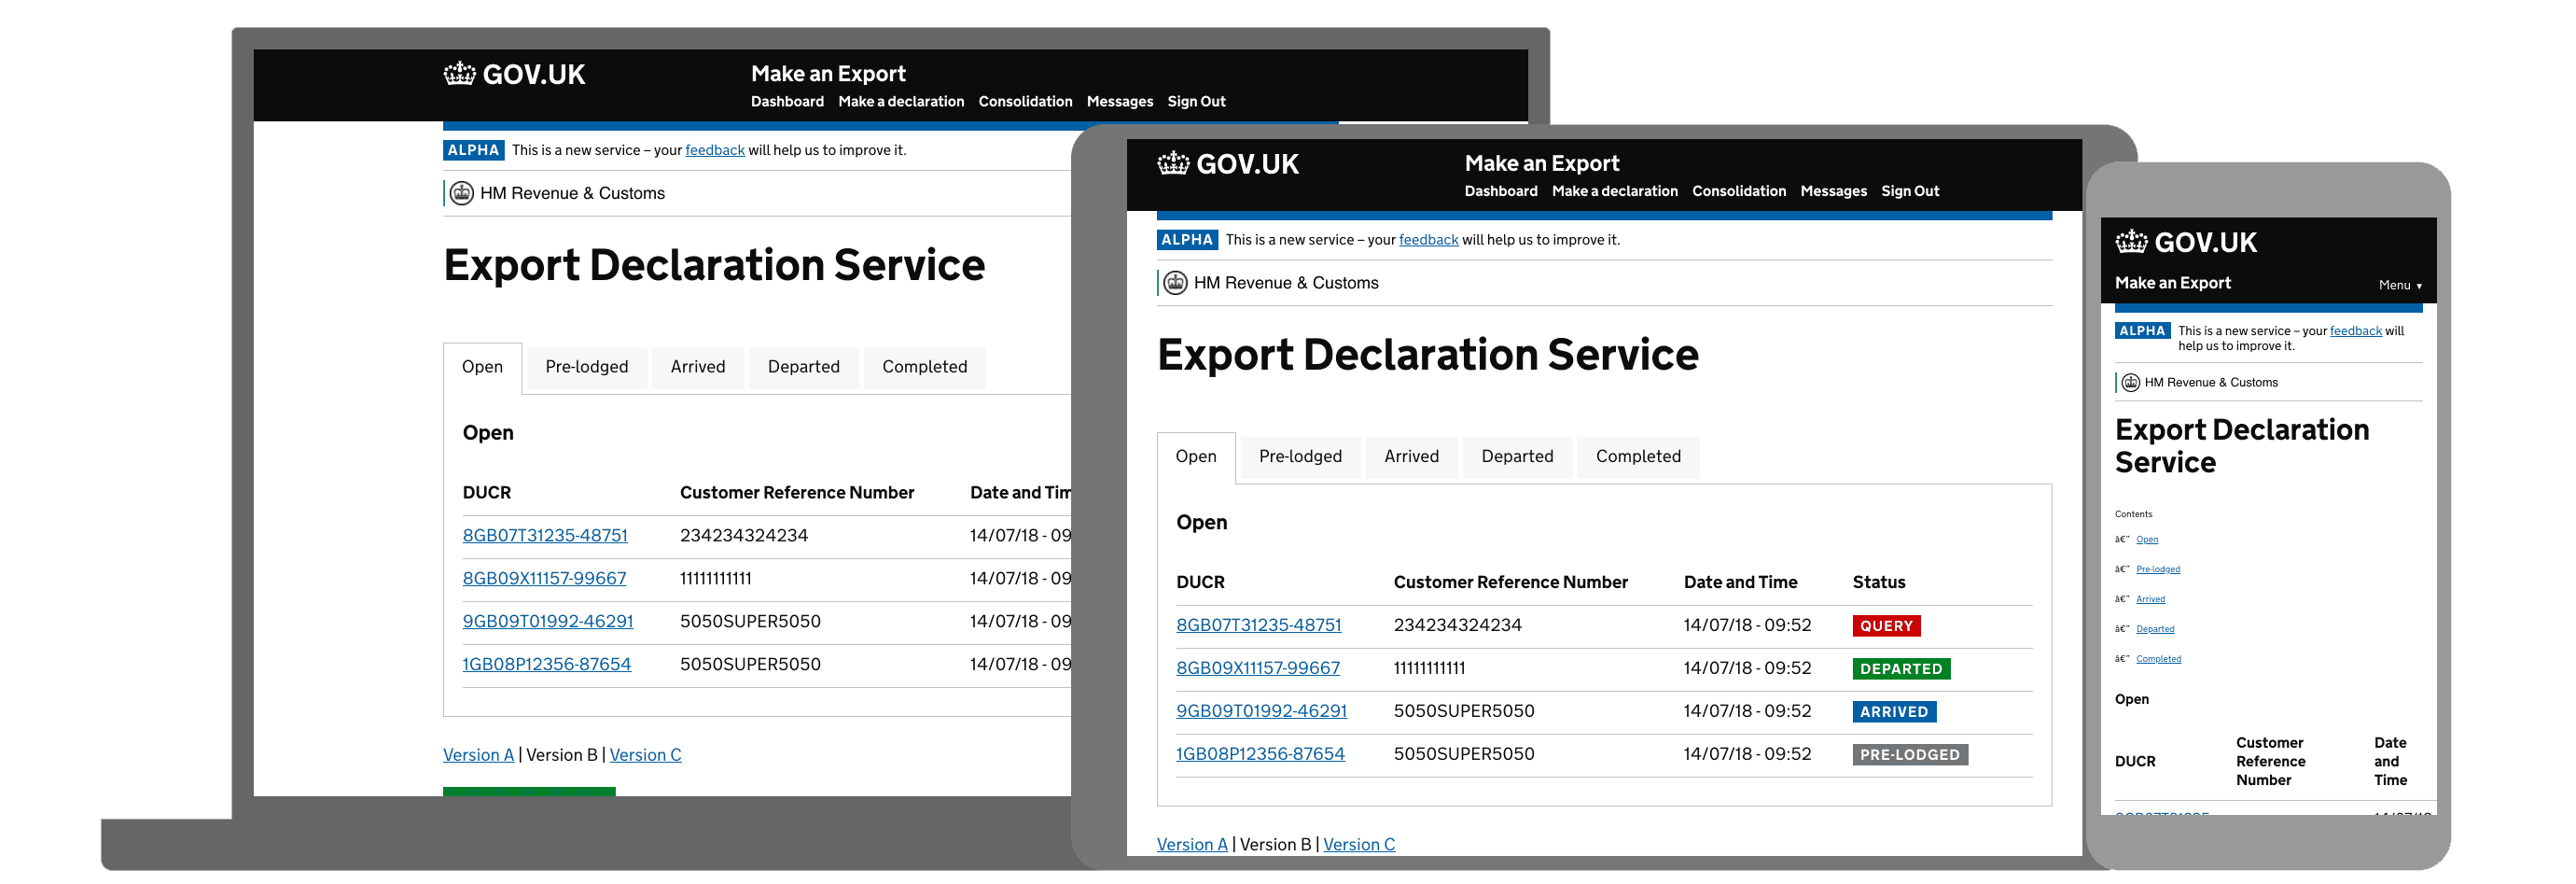 Export Declaration Service dashboard